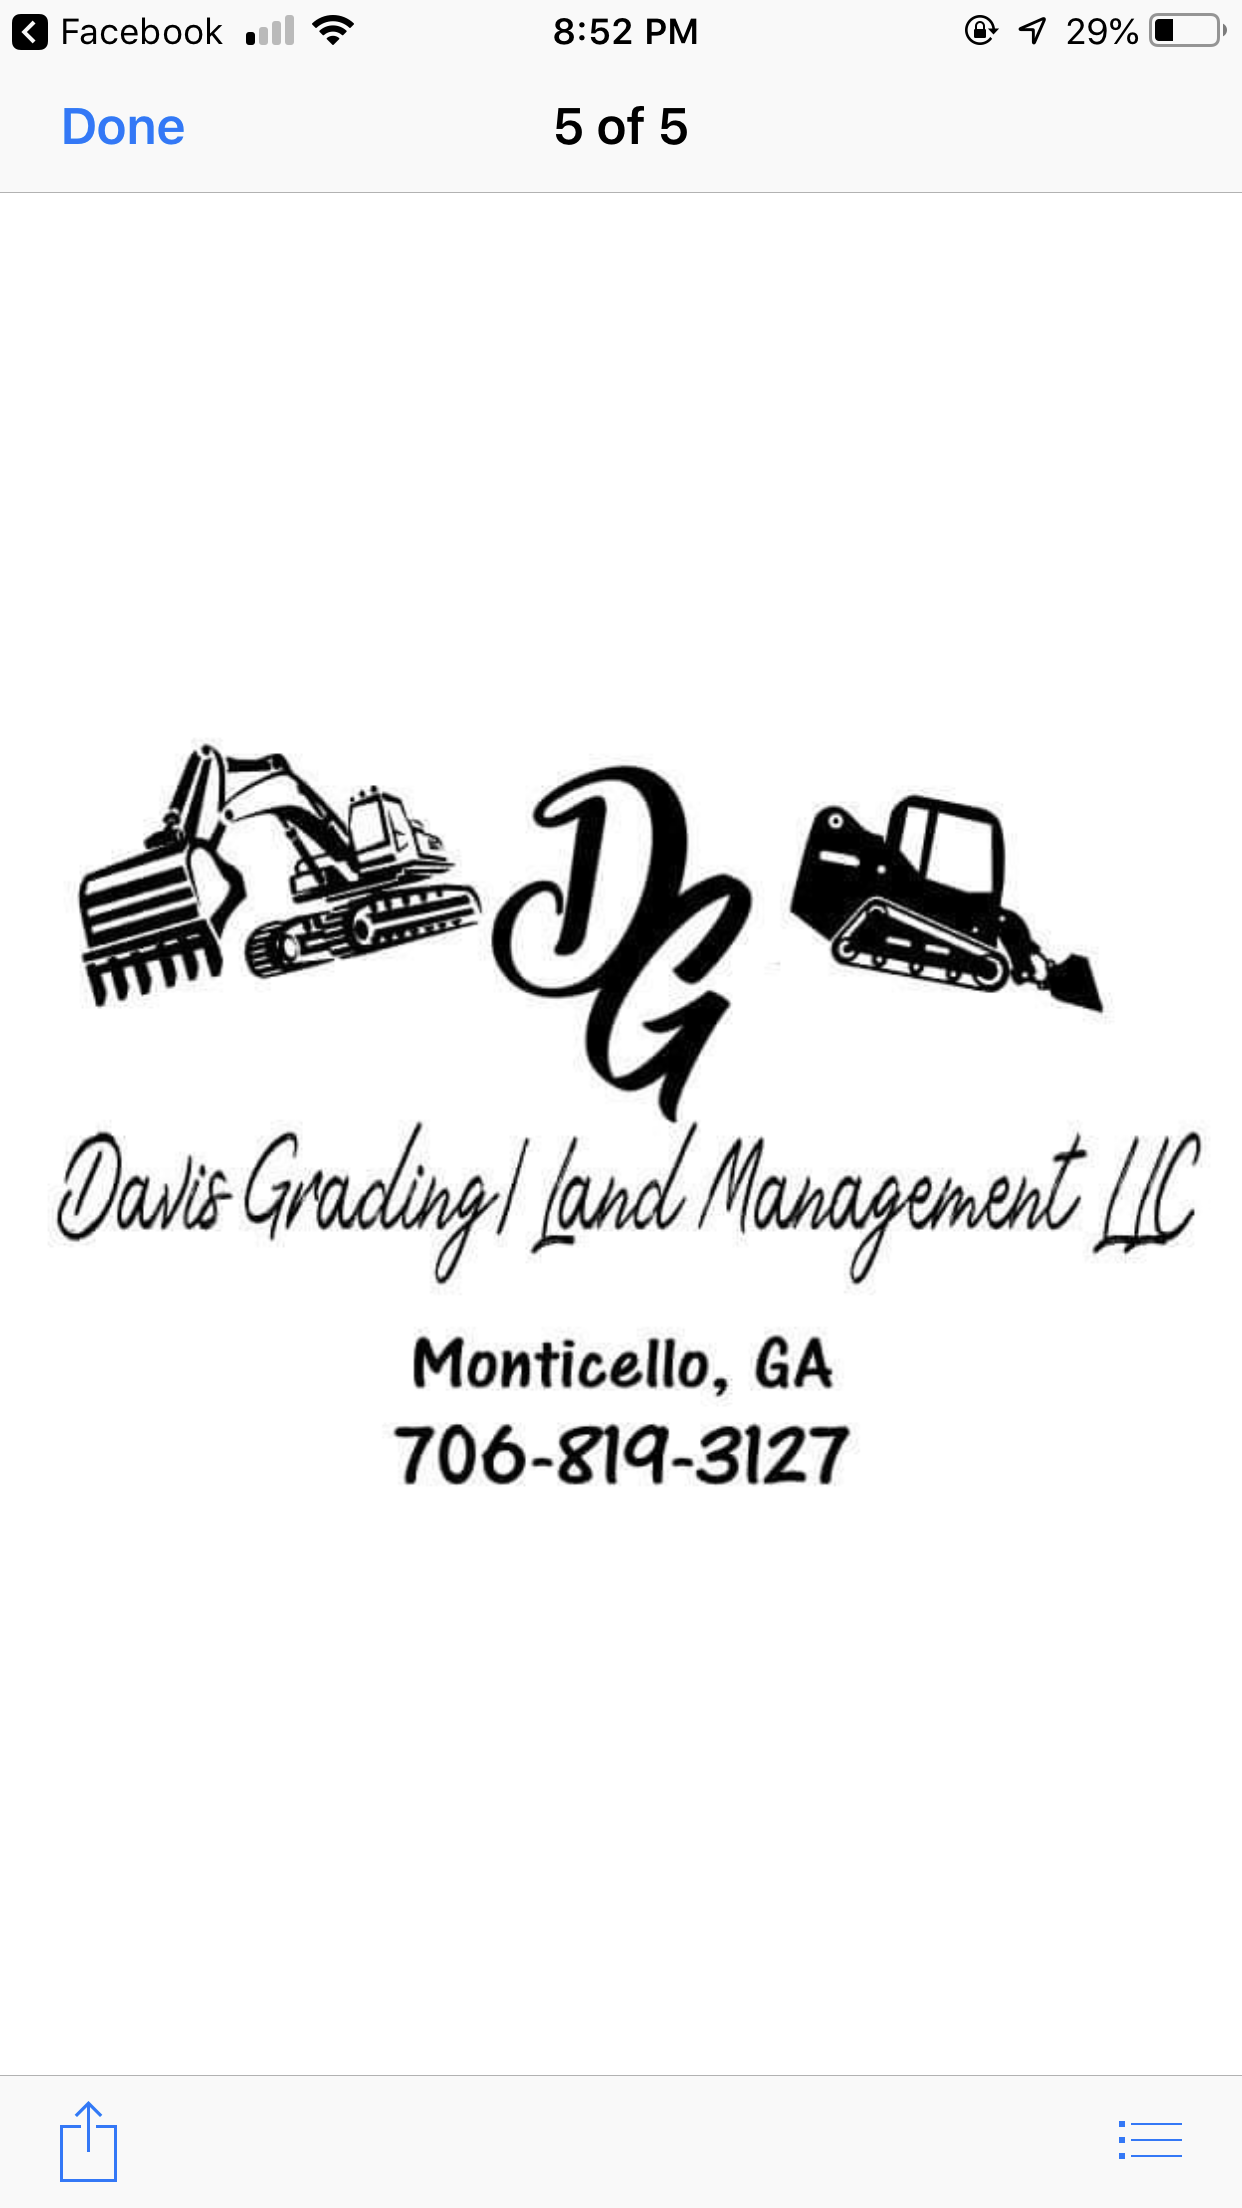 Davis Grading and Land Management, LLC Logo